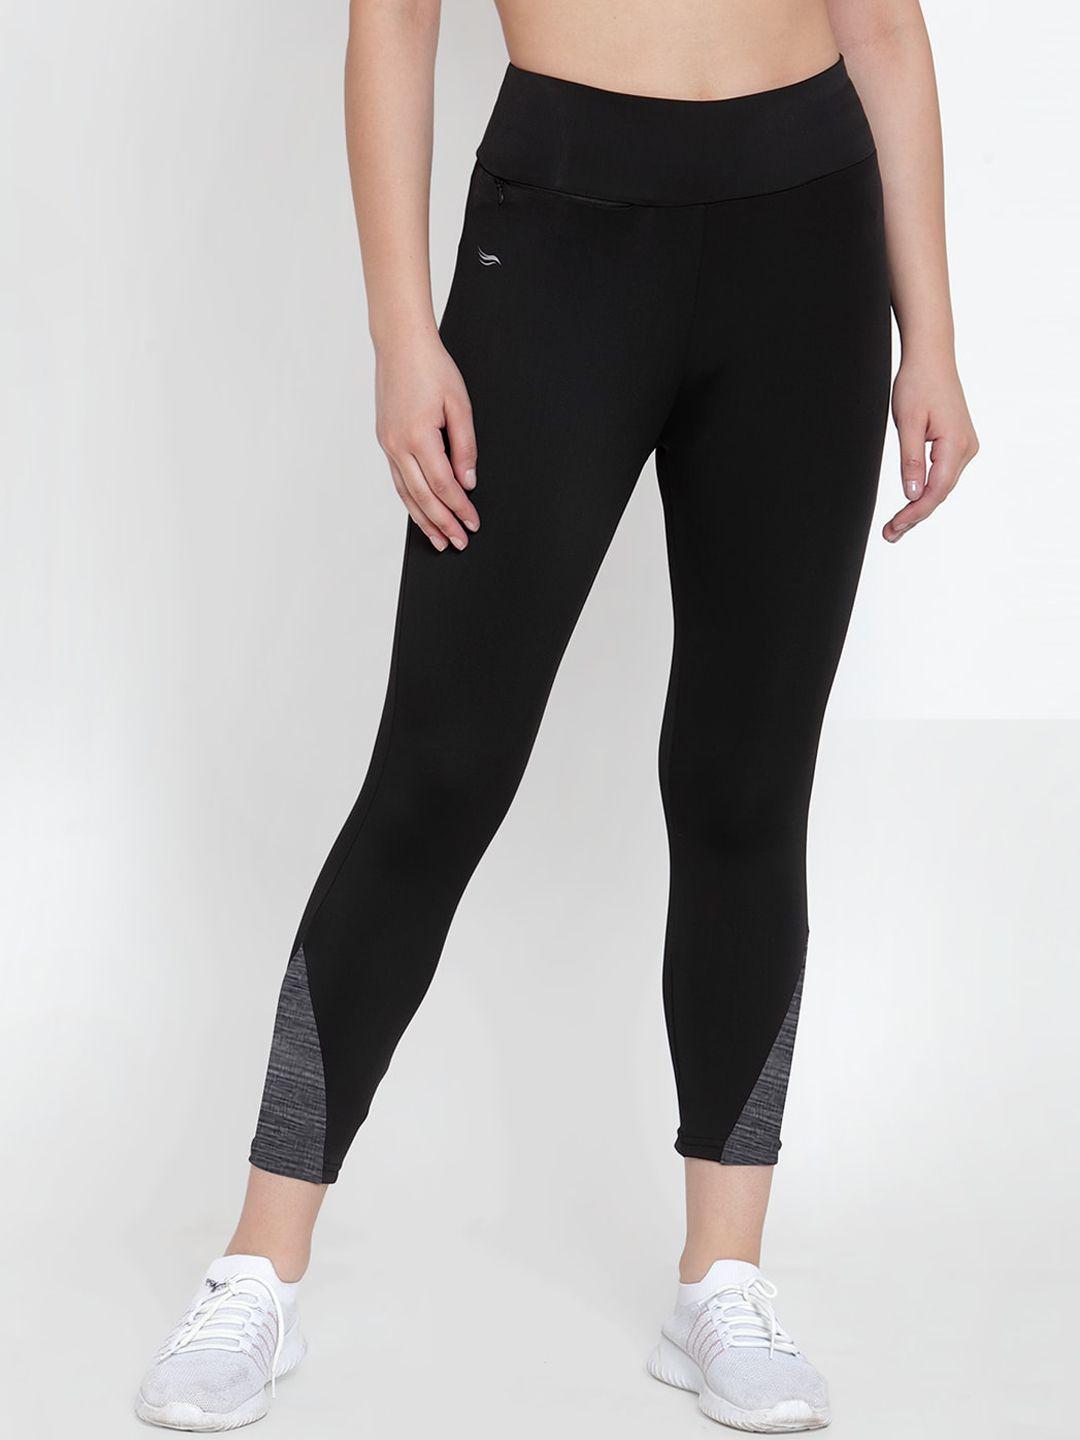 cukoo-women-black-colourblocked-comfort-fit-tights